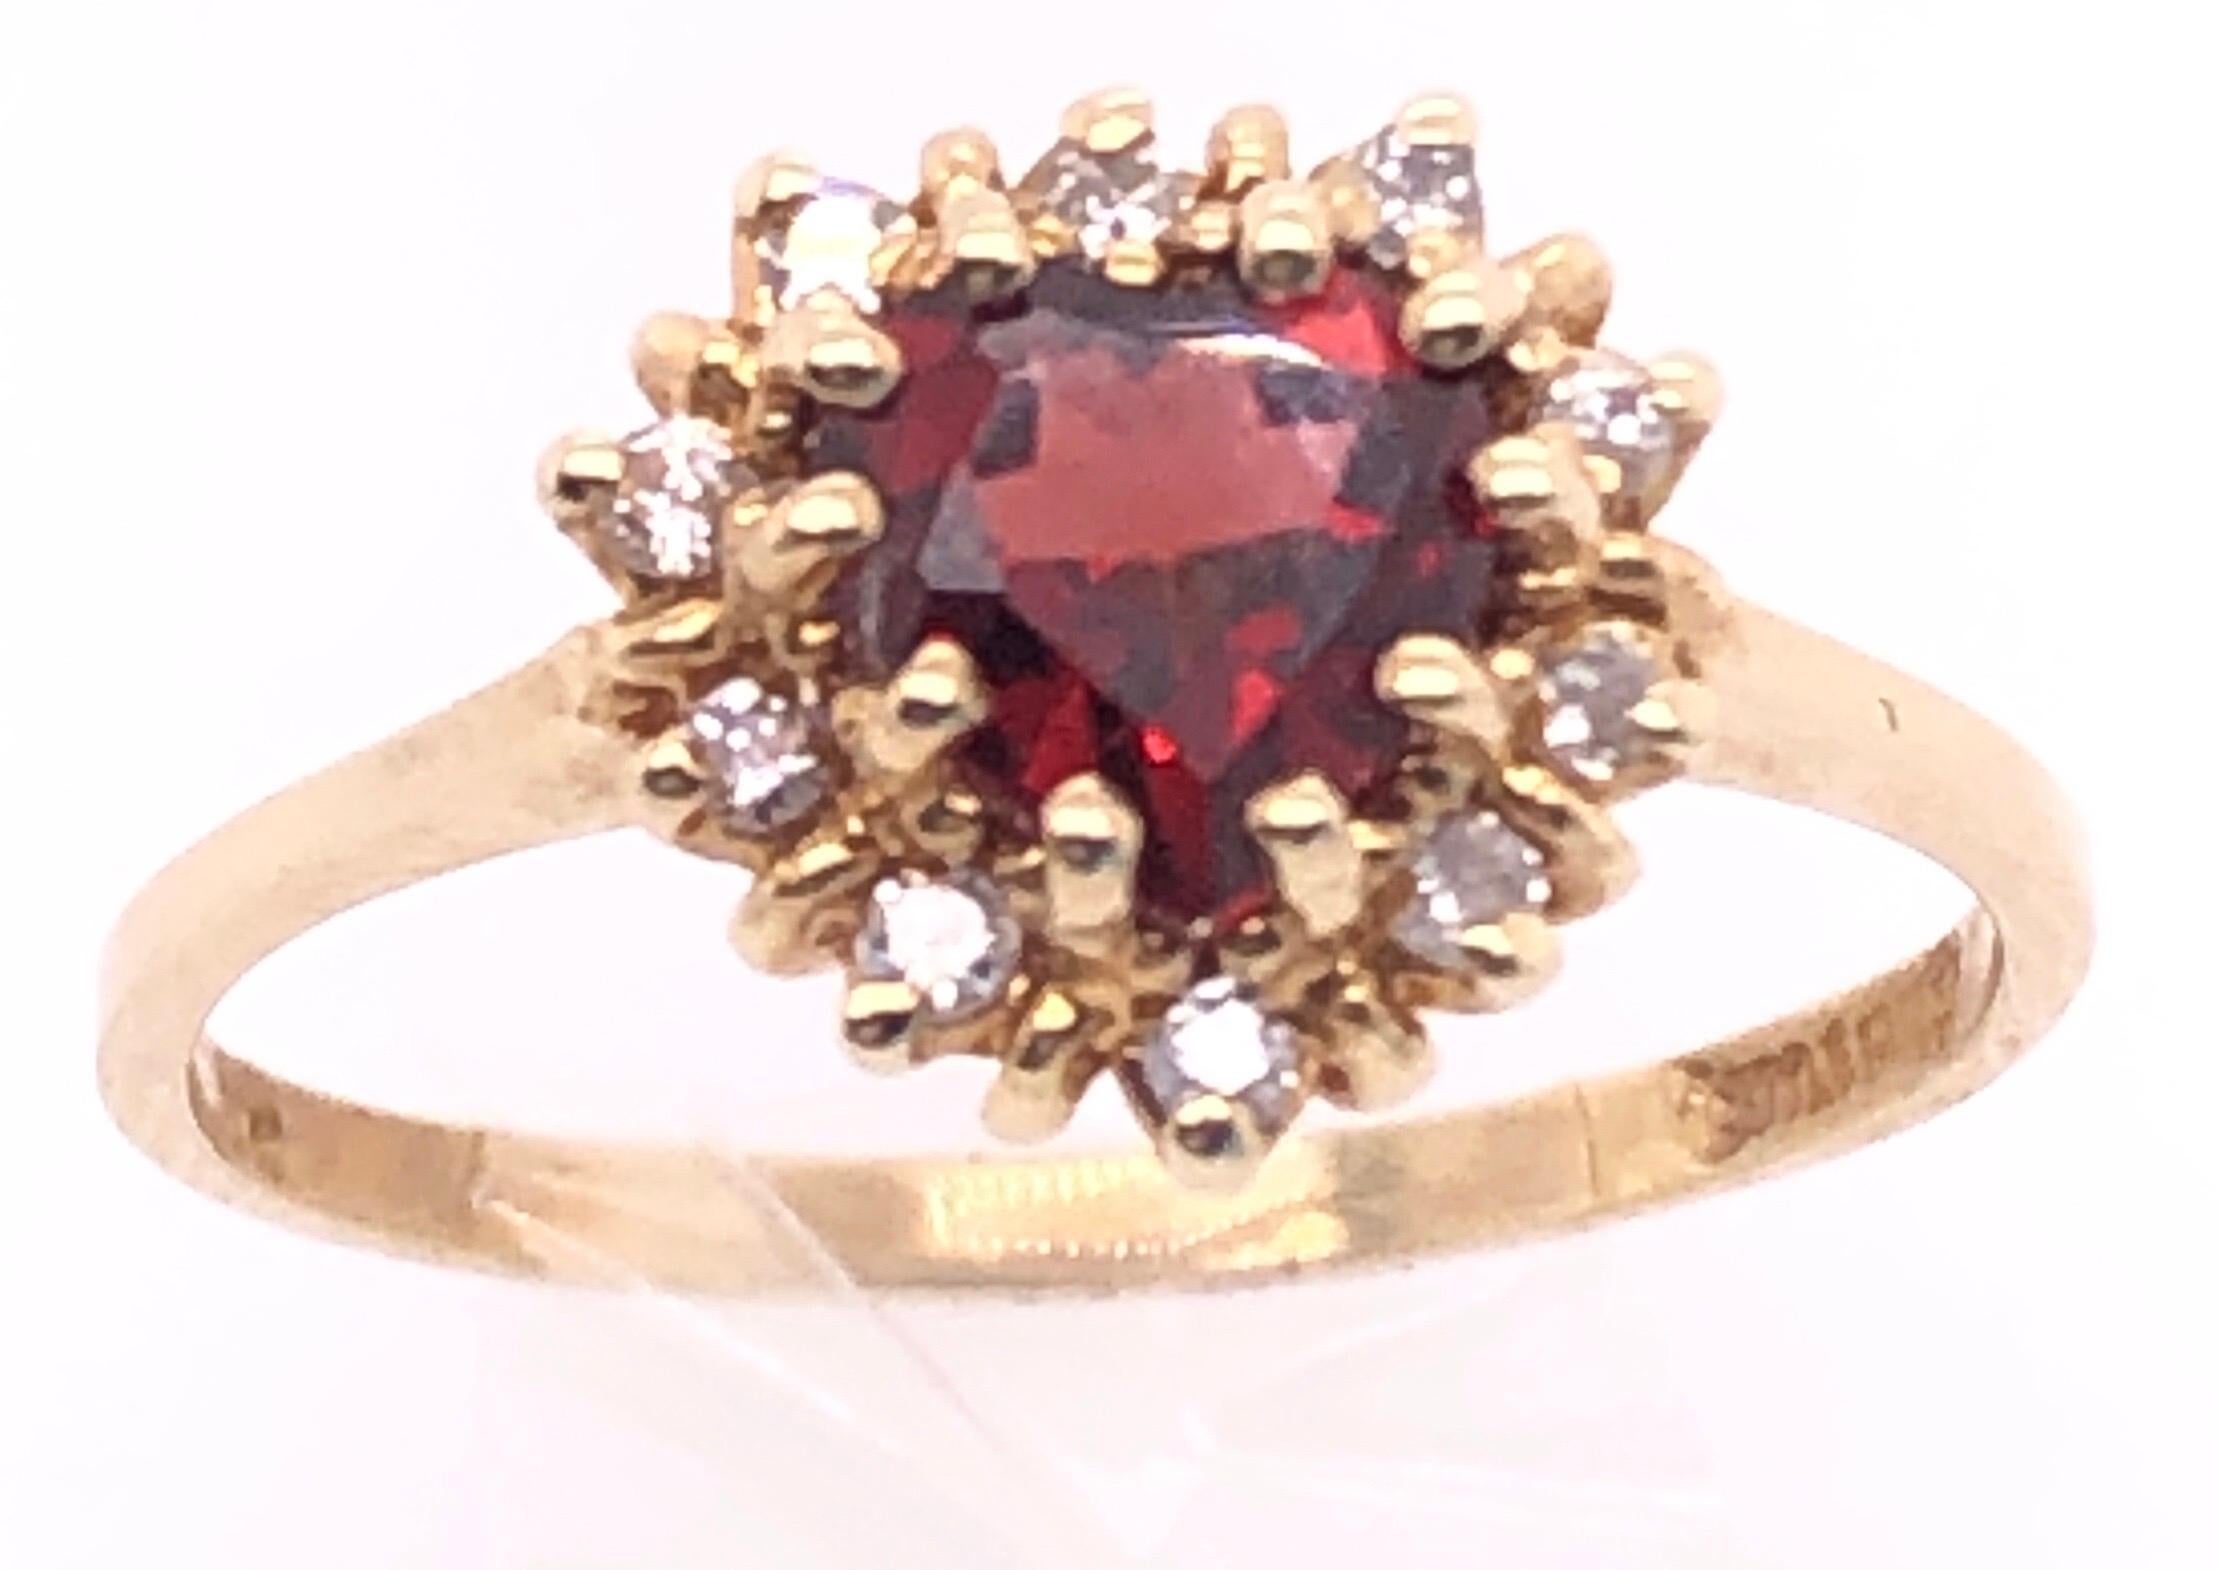 14 Karat Yellow Gold Contemporary Heart Shape Garnet Stone Ring Size 6.5.
0.10 total diamond weight
3.2 grams total weight.